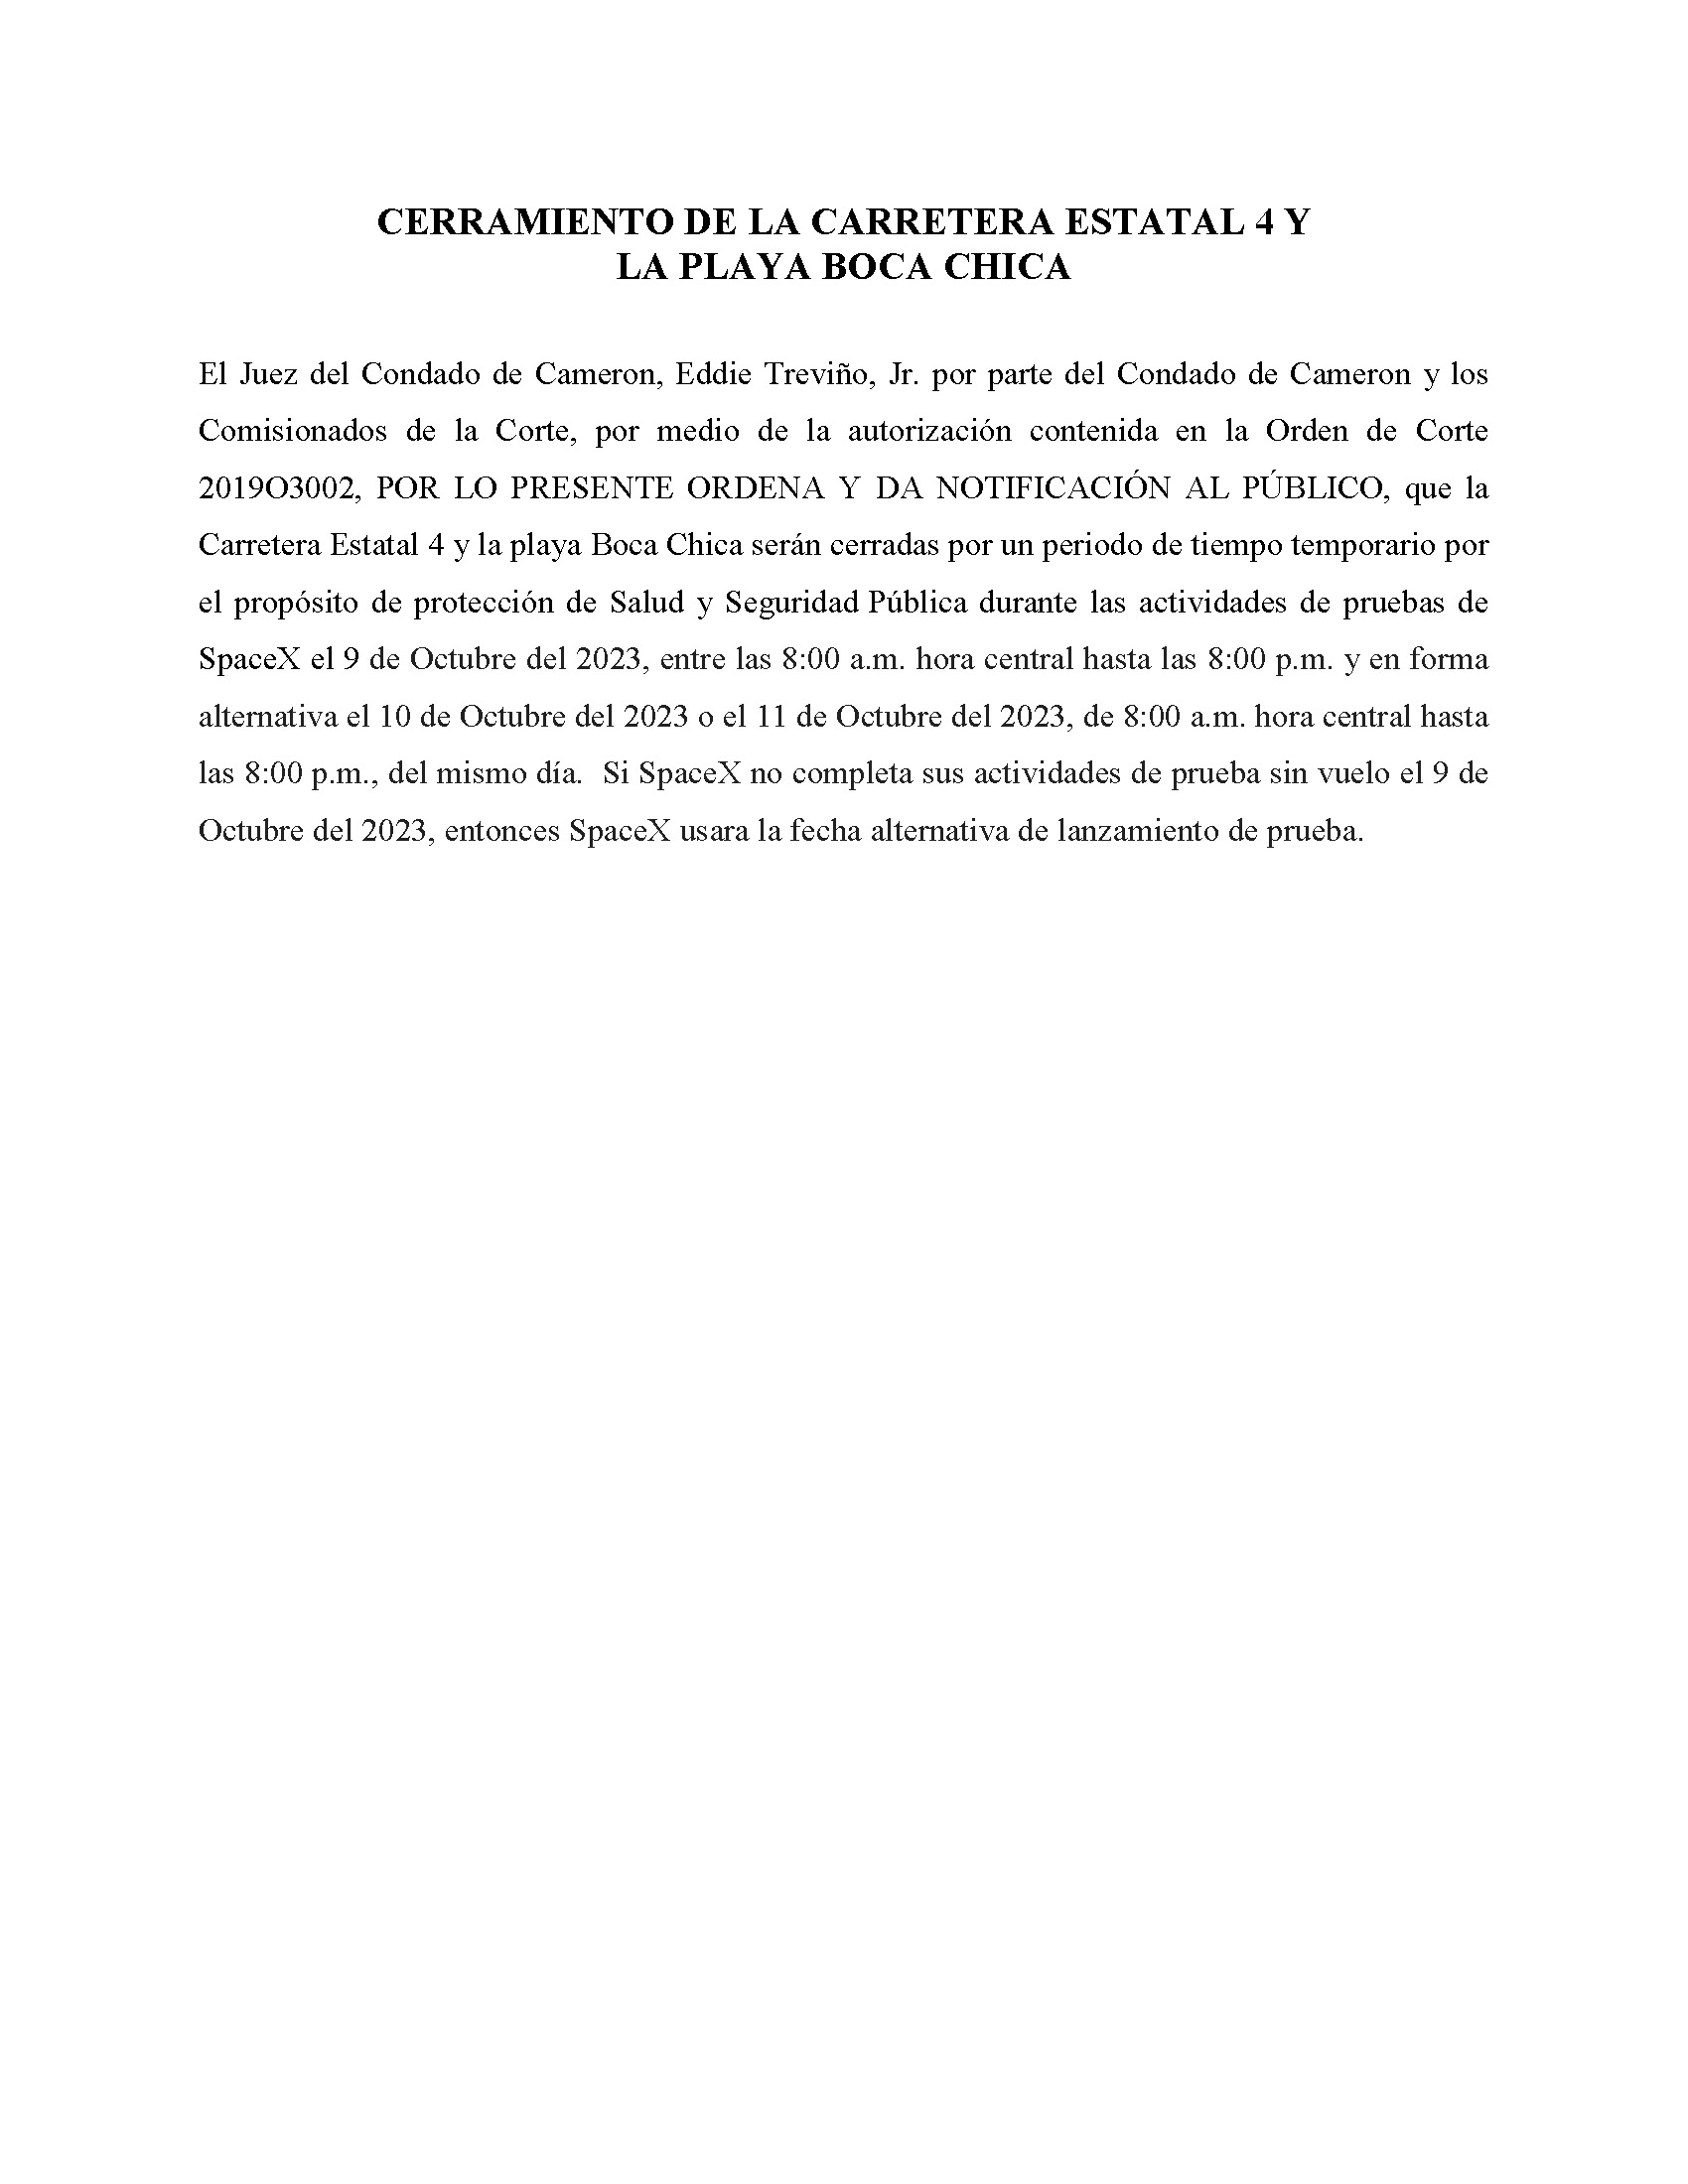 ORDER.CLOSURE OF HIGHWAY 4 Y LA PLAYA BOCA CHICA.SPANISH.10.09.23